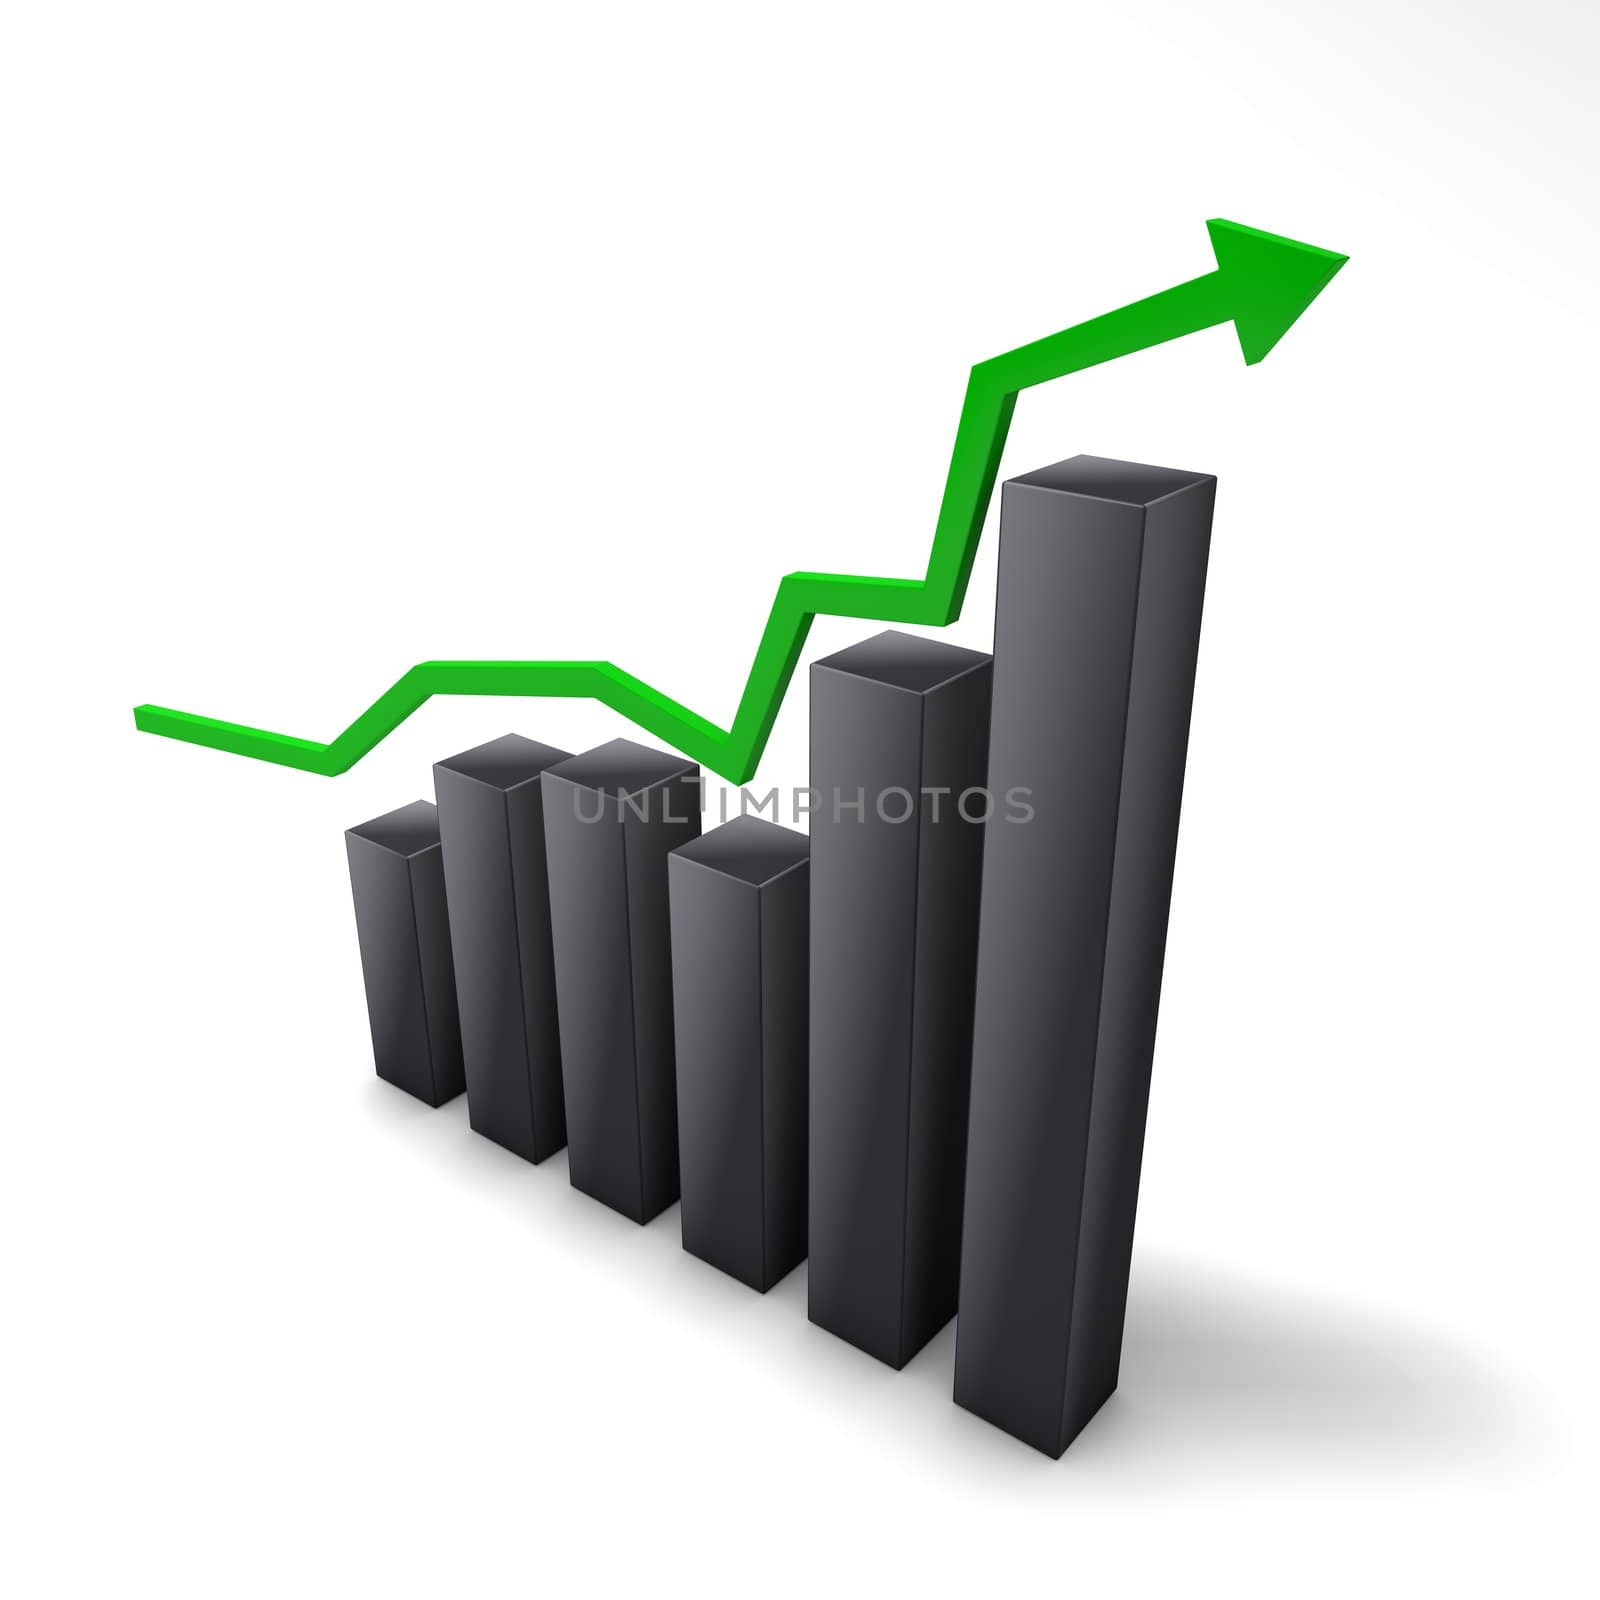 The upward trend in the stock market by 3DAgentur